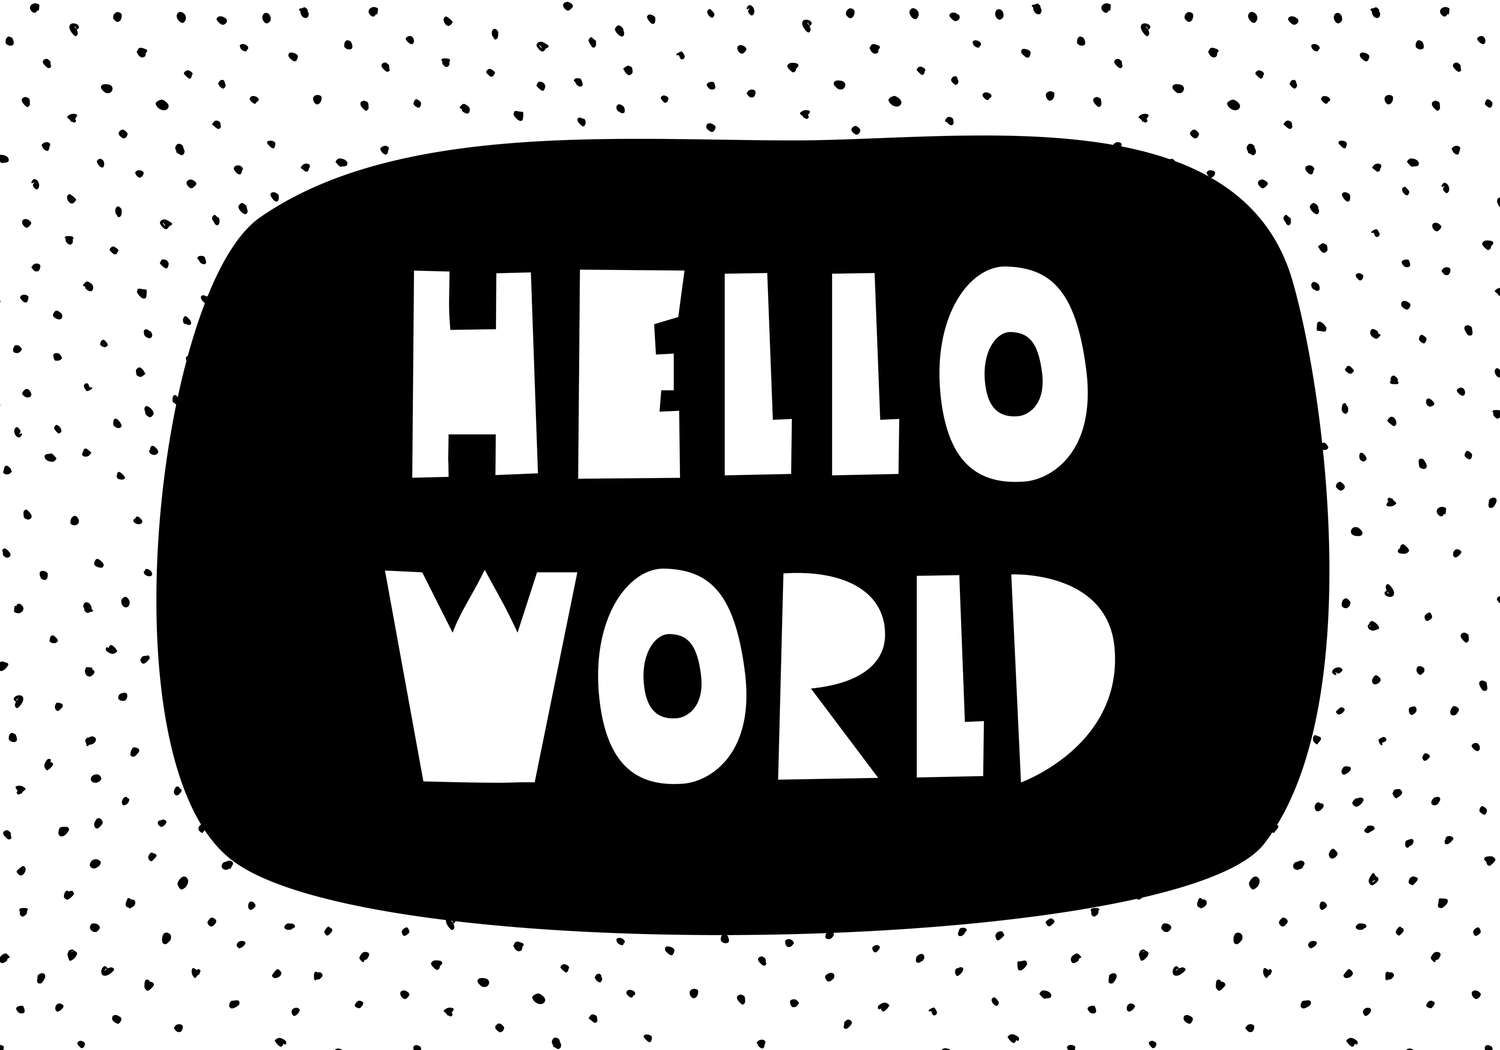             Photo wallpaper for children's room with lettering "Hello World" - Smooth & matt non-woven
        